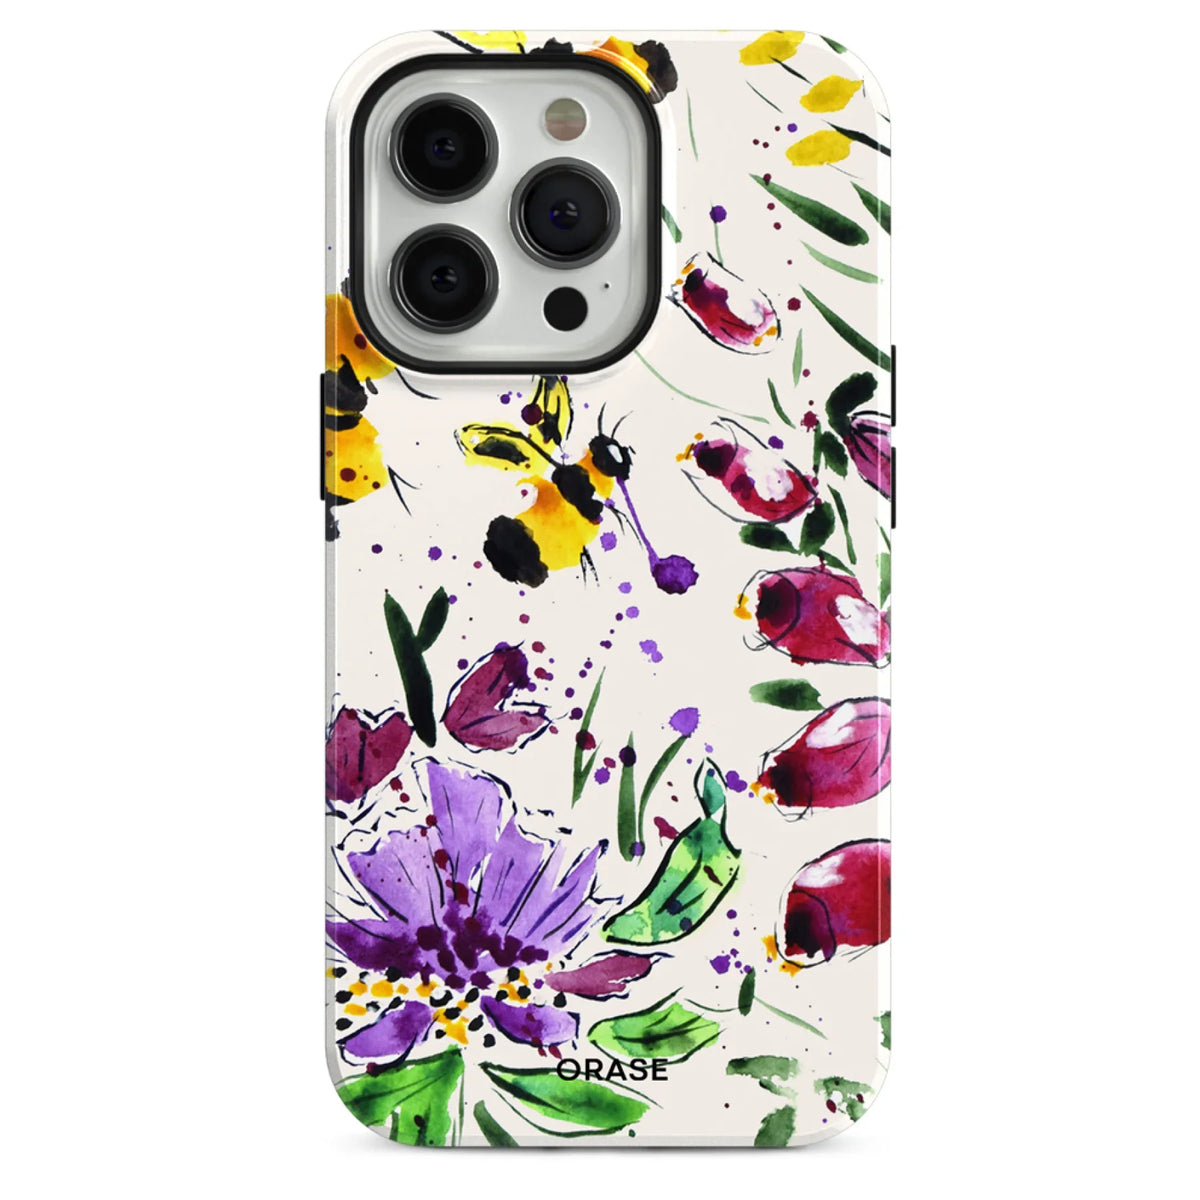 Floral Flight iPhone Case - iPhone 12 Pro